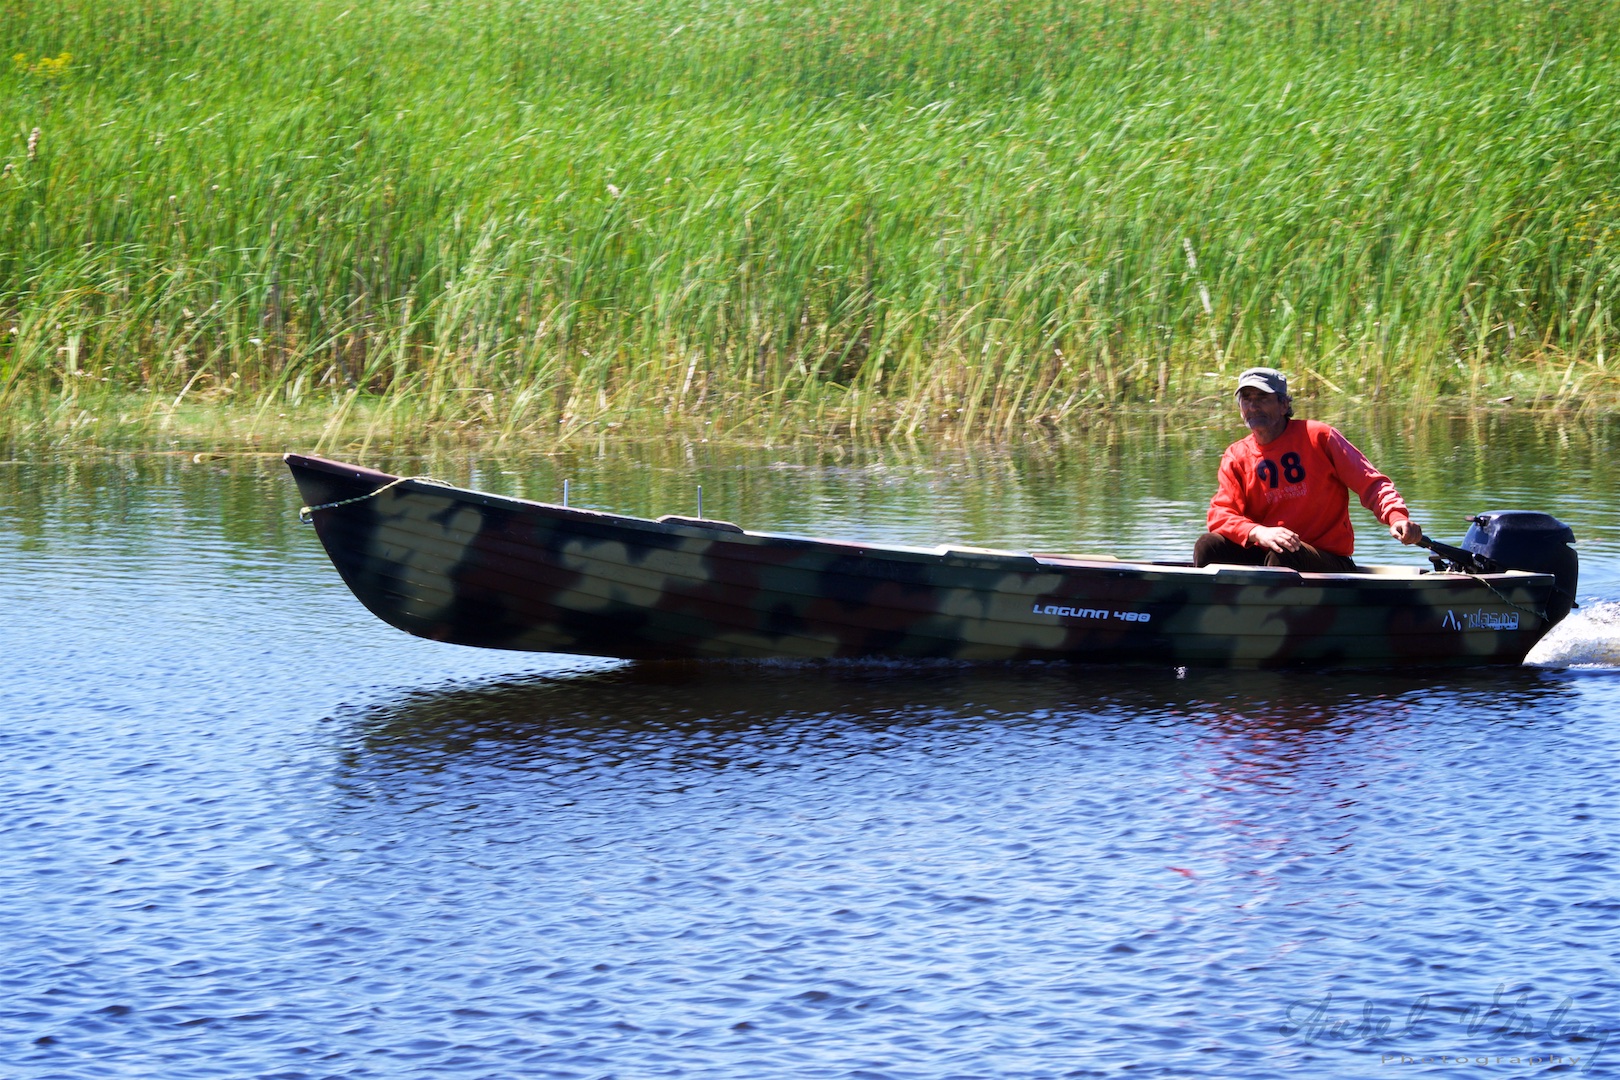 *Lotca* is a specific boat of fisherman in Danube Delta.